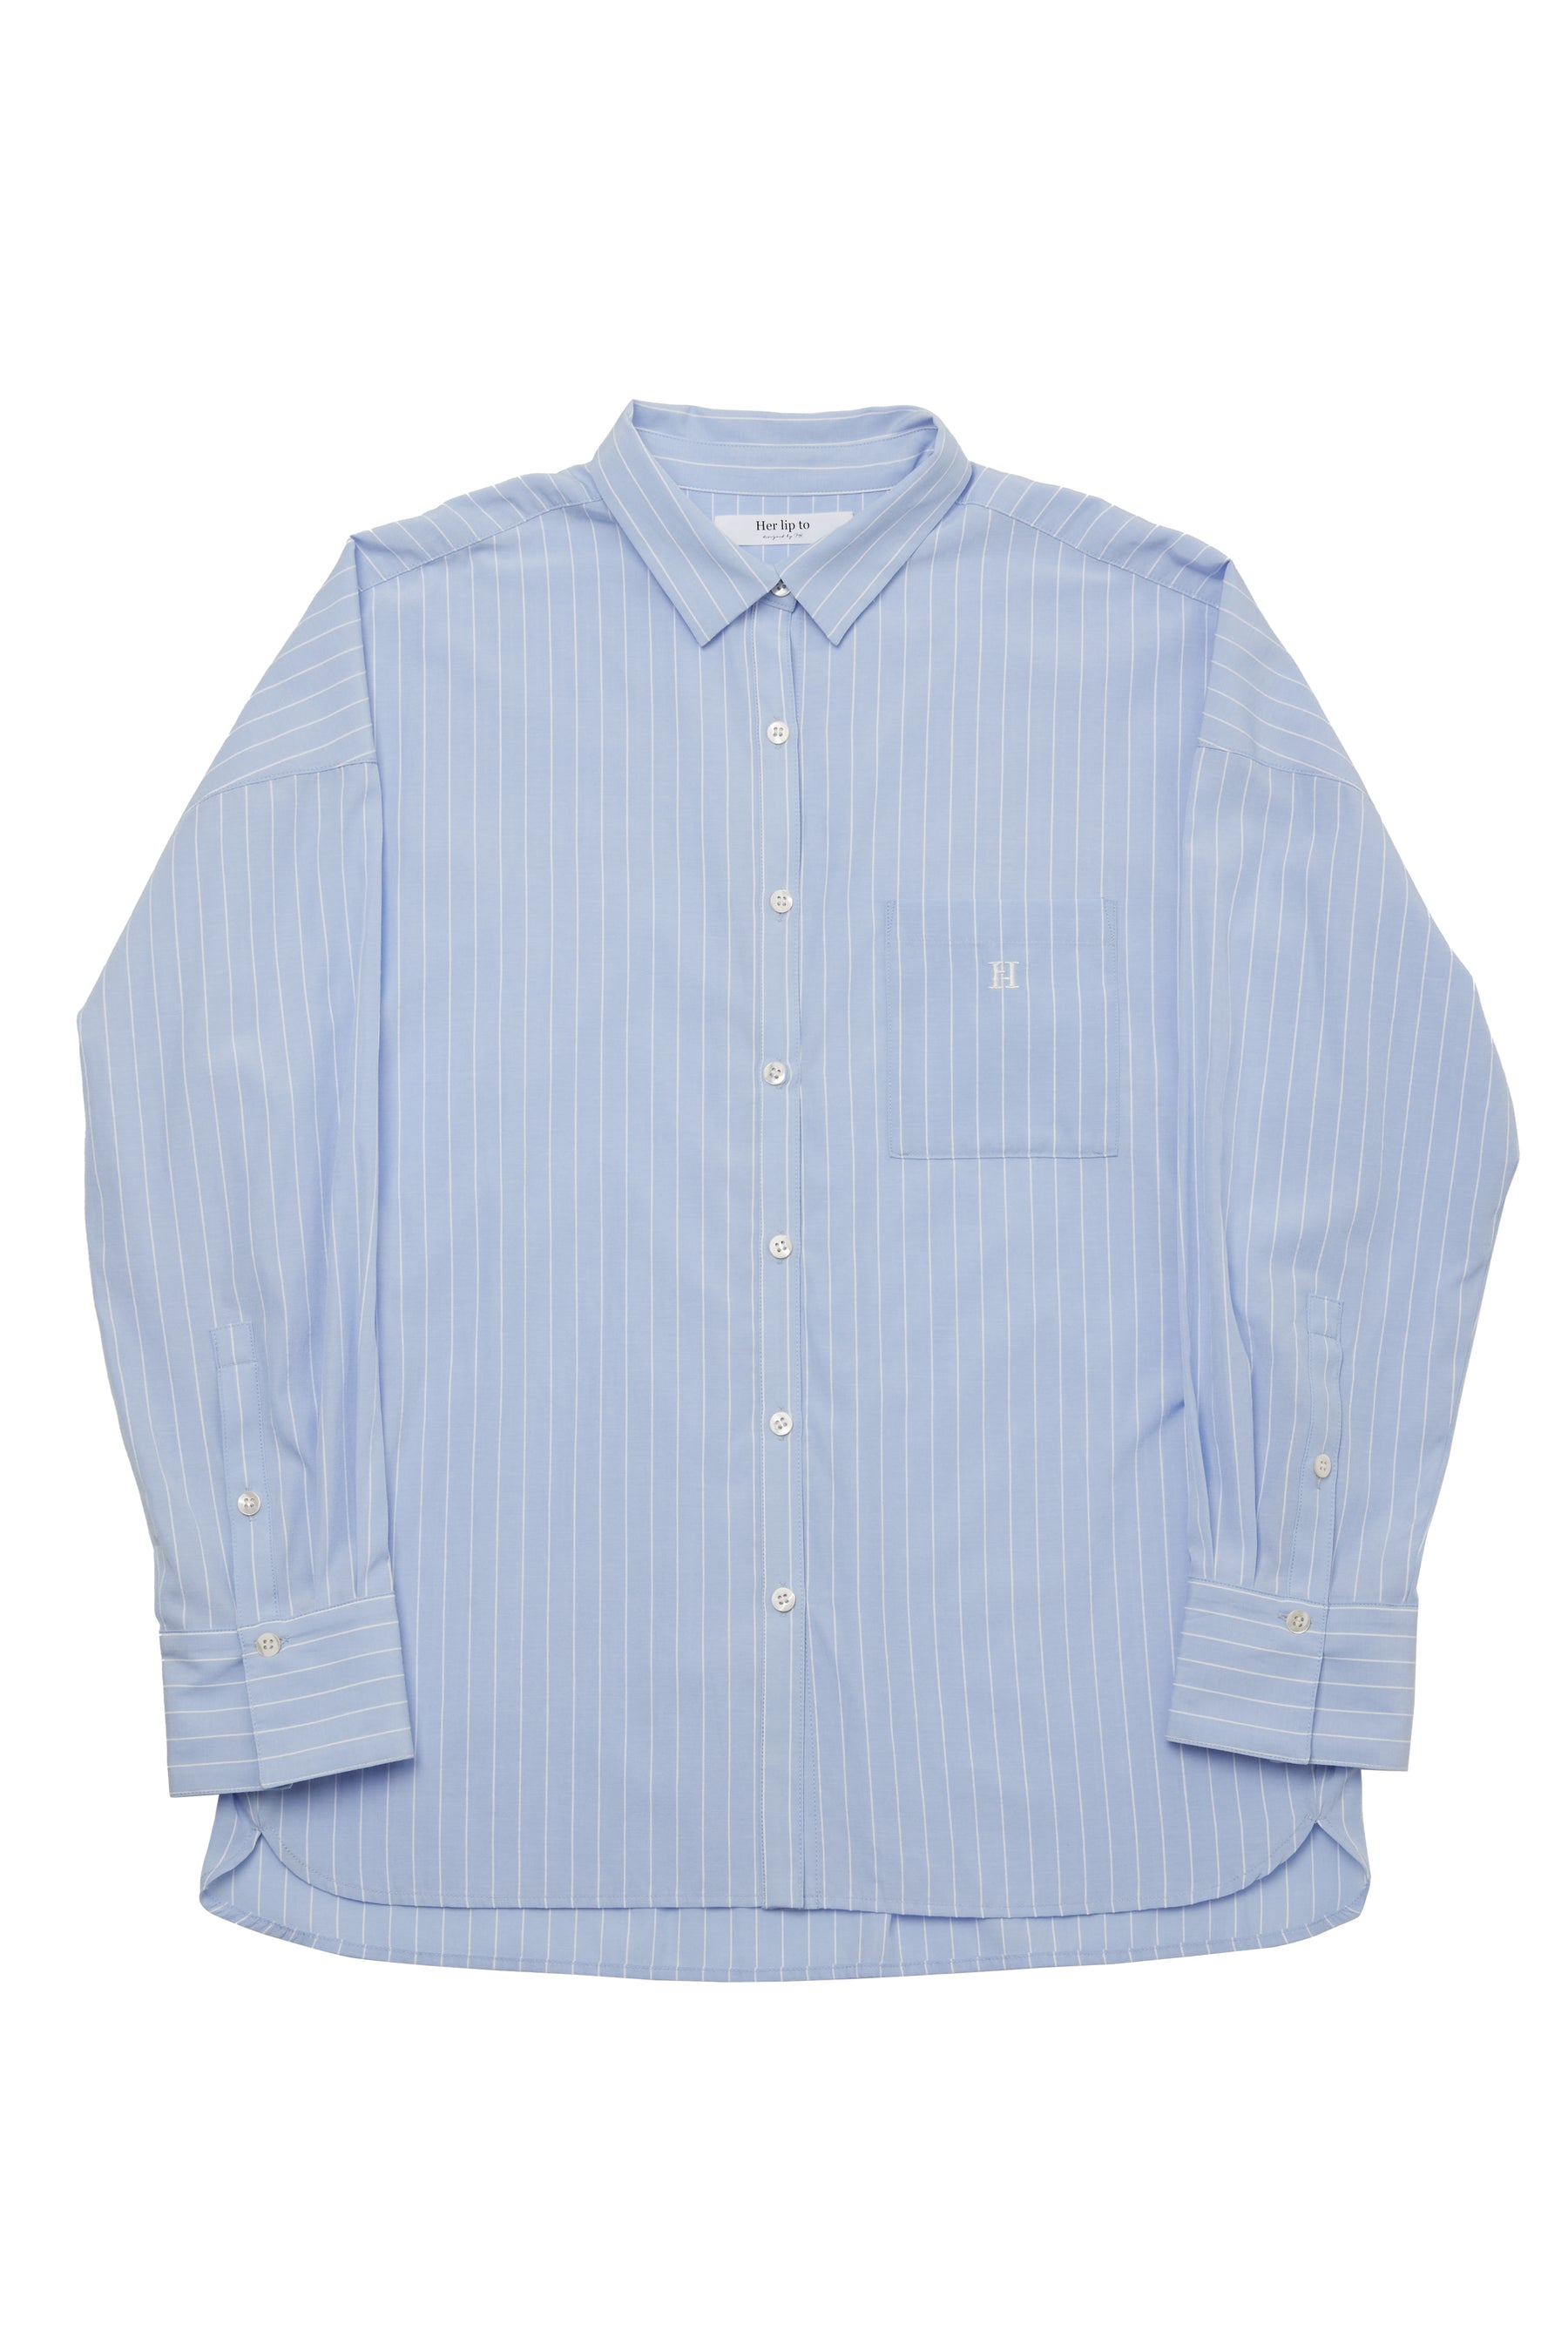 6,240円新品未使用♡herlipto Have It All Stripe Shirt